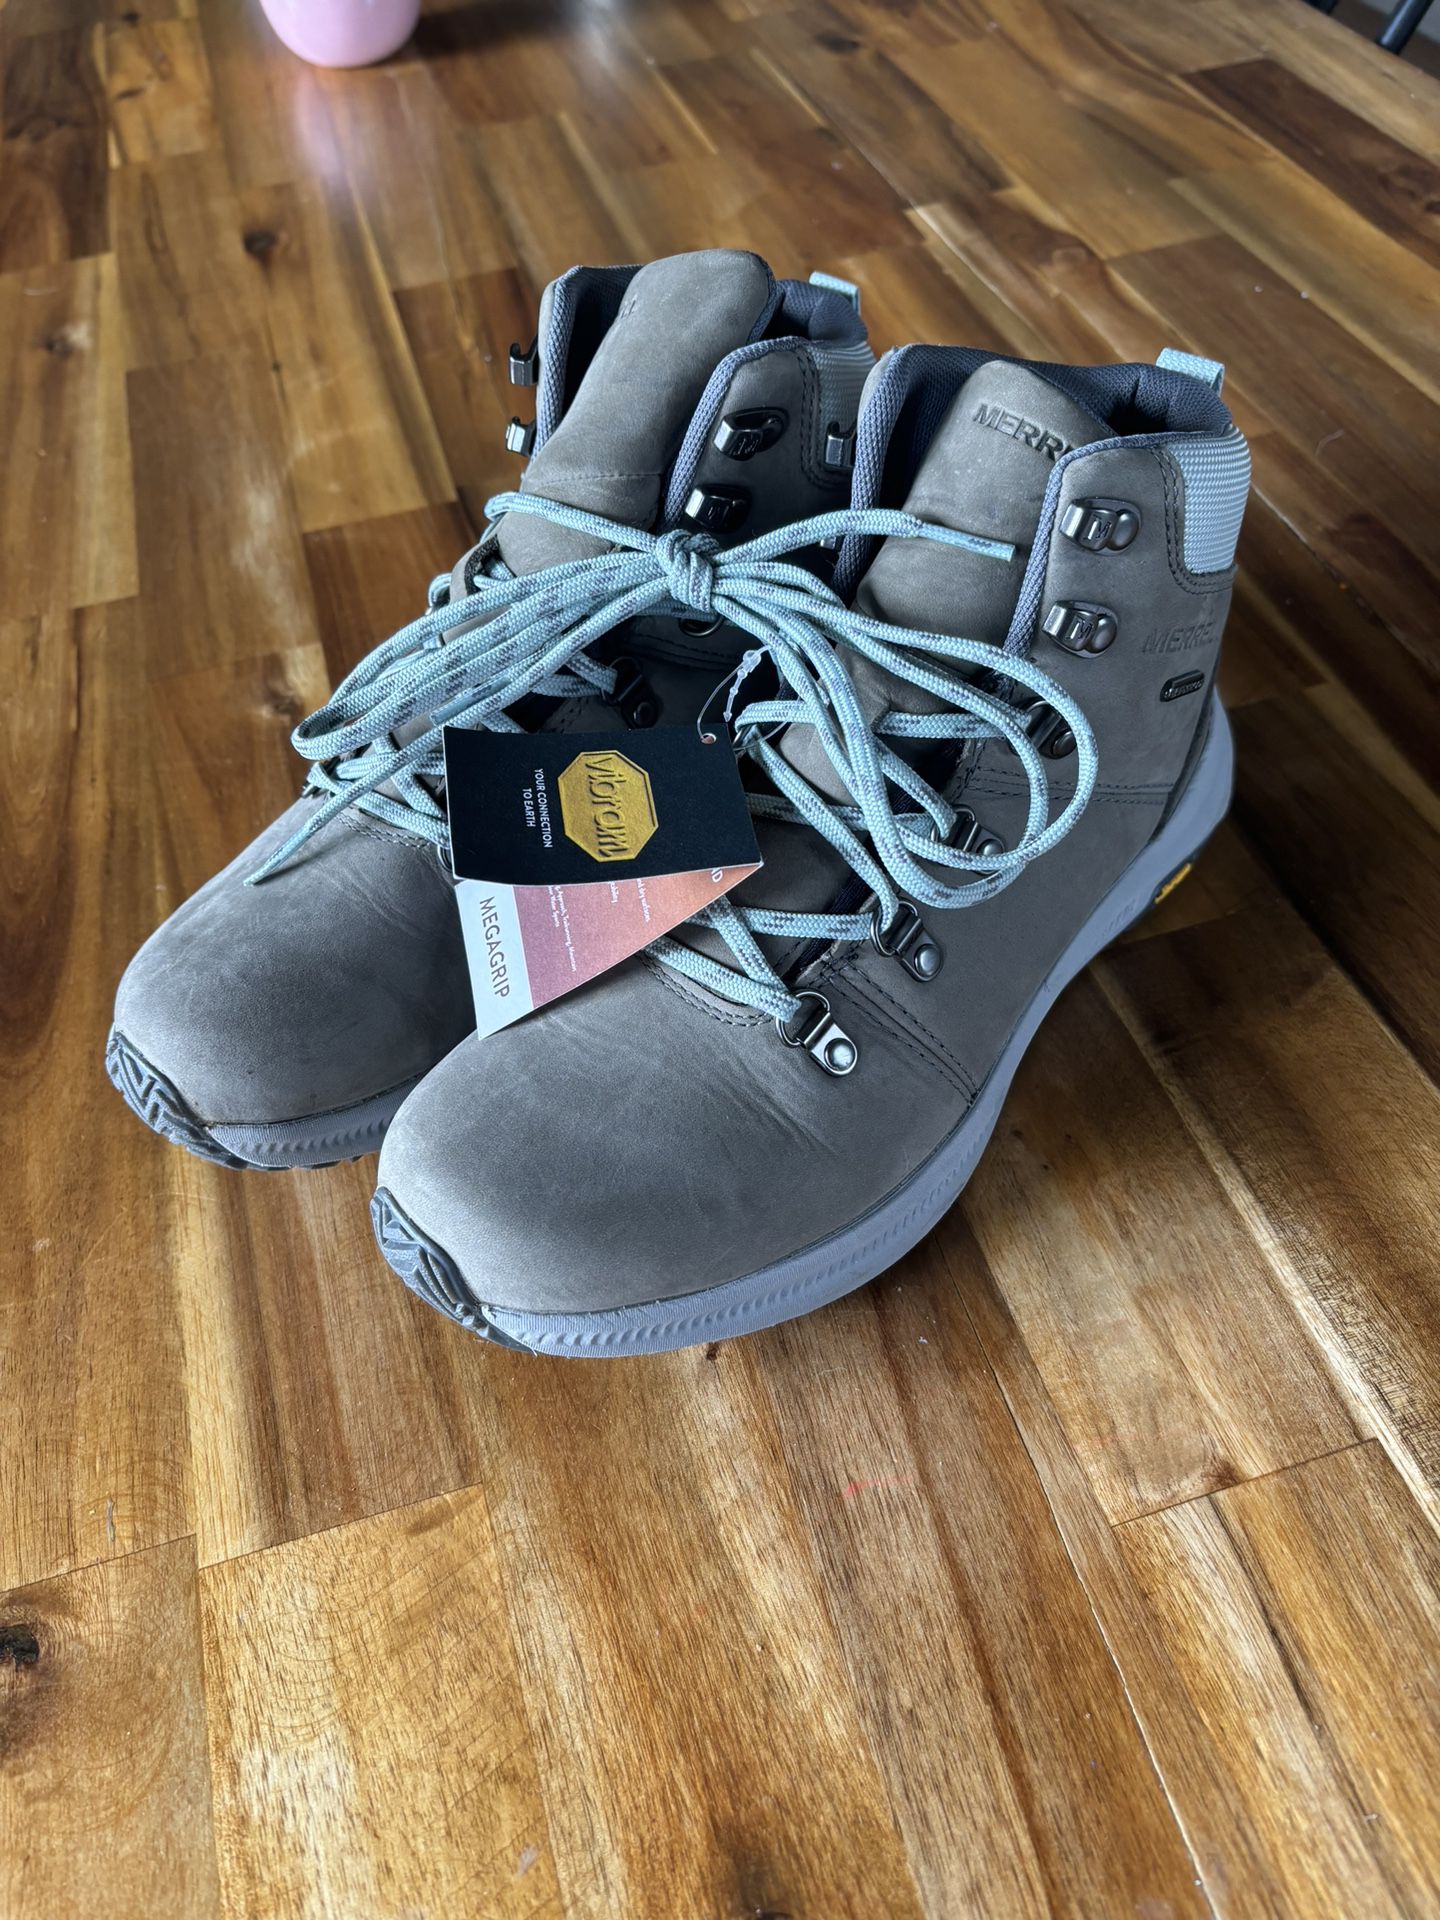 Merrell (size 7.5) Women's Ontario 2 Mid Waterproof Hiking Boots